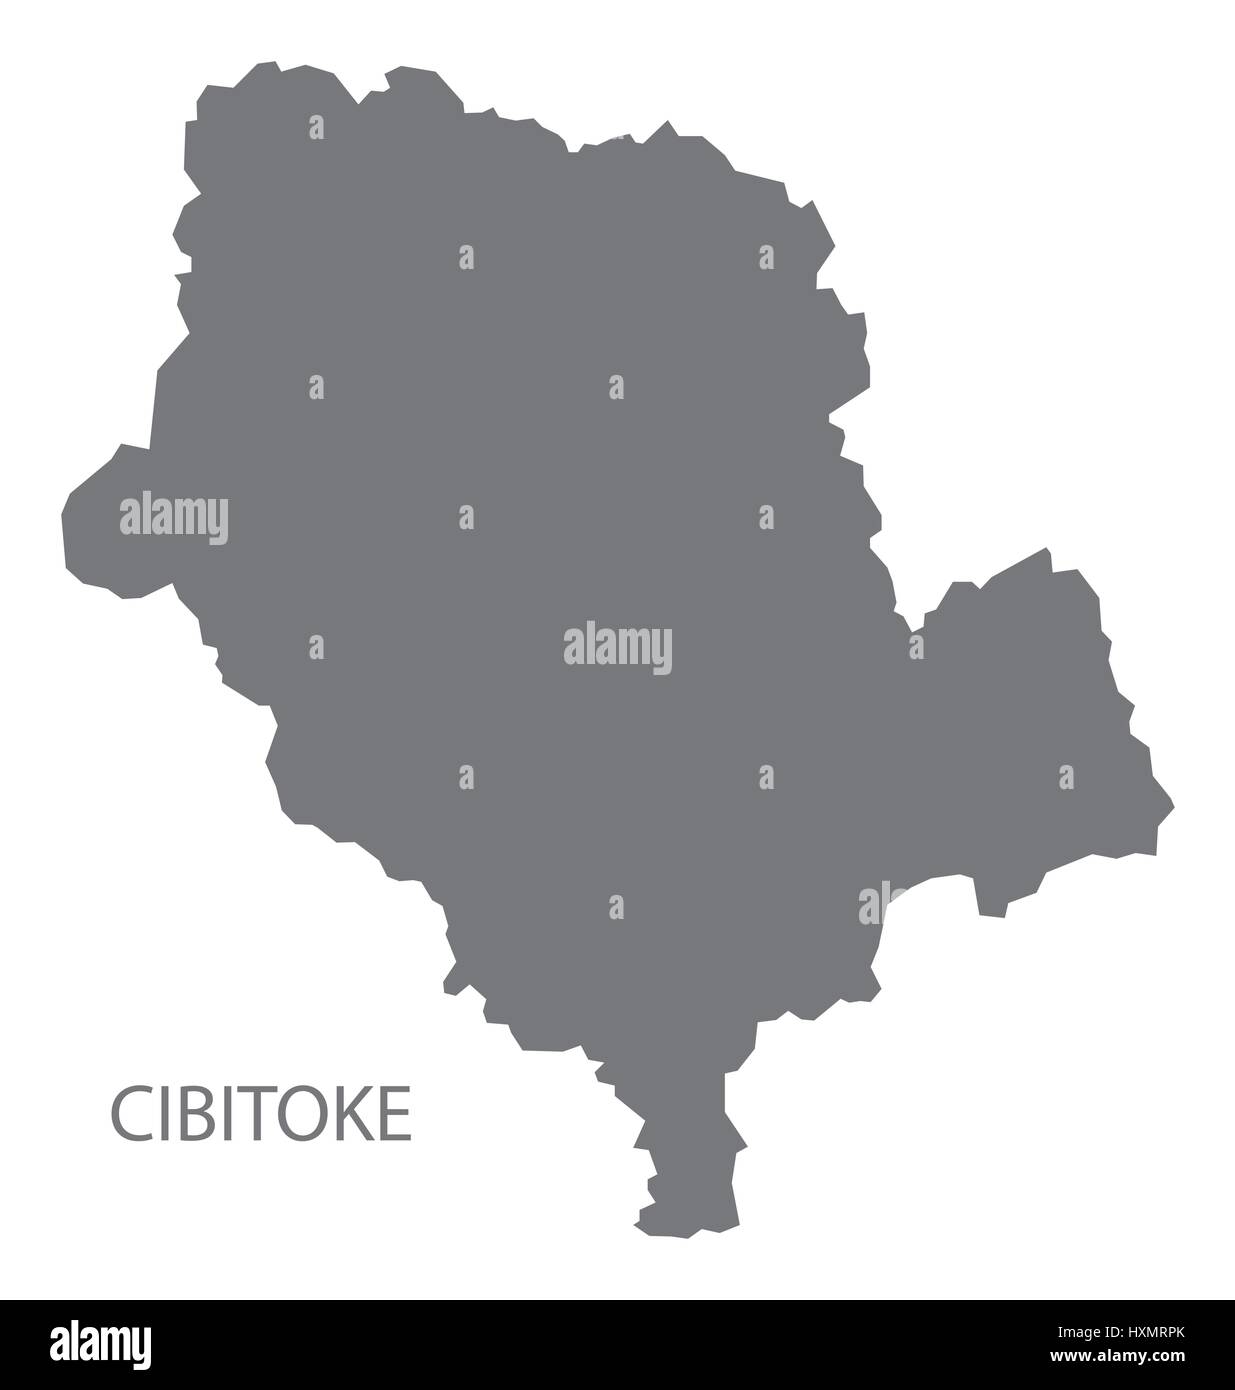 Cibitoke Burundi Provinz Karte grau Abbildung silhouette Stock Vektor